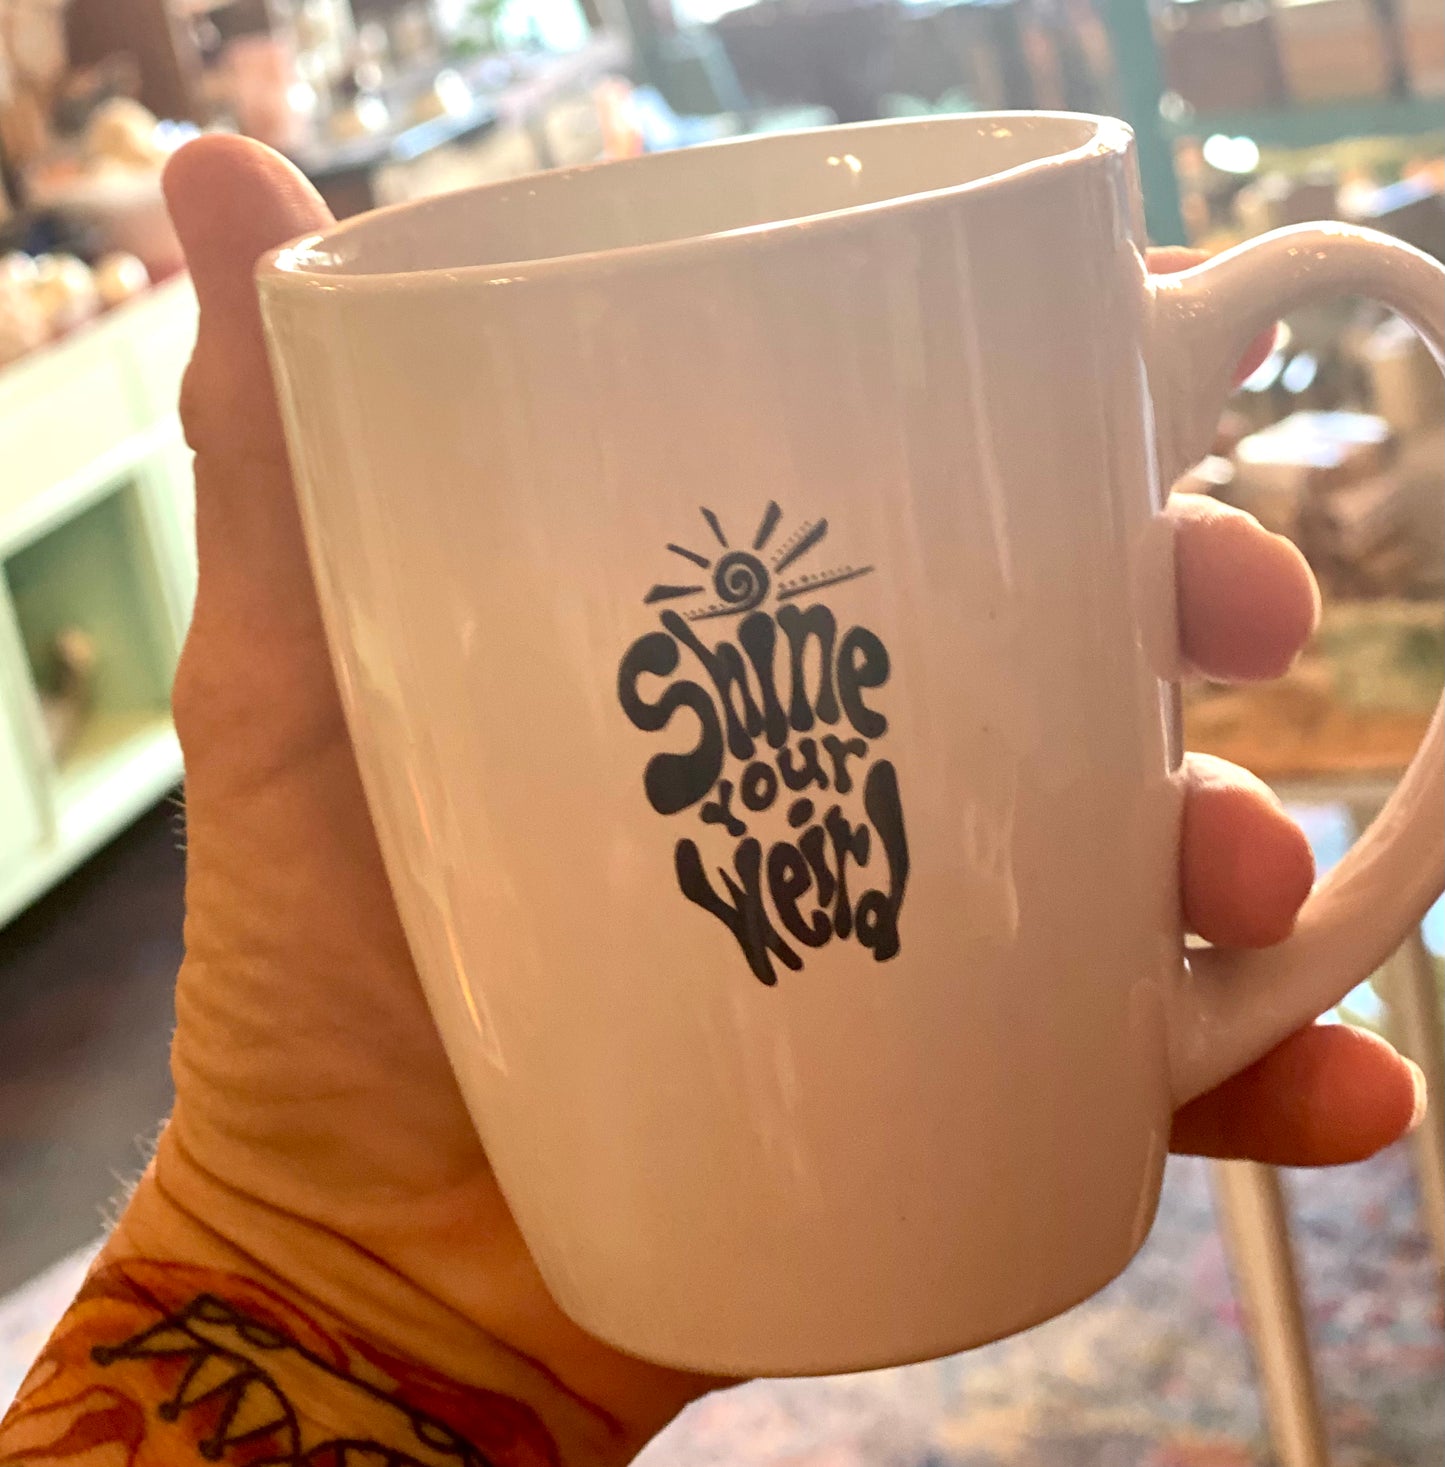 Shine your weird Mug